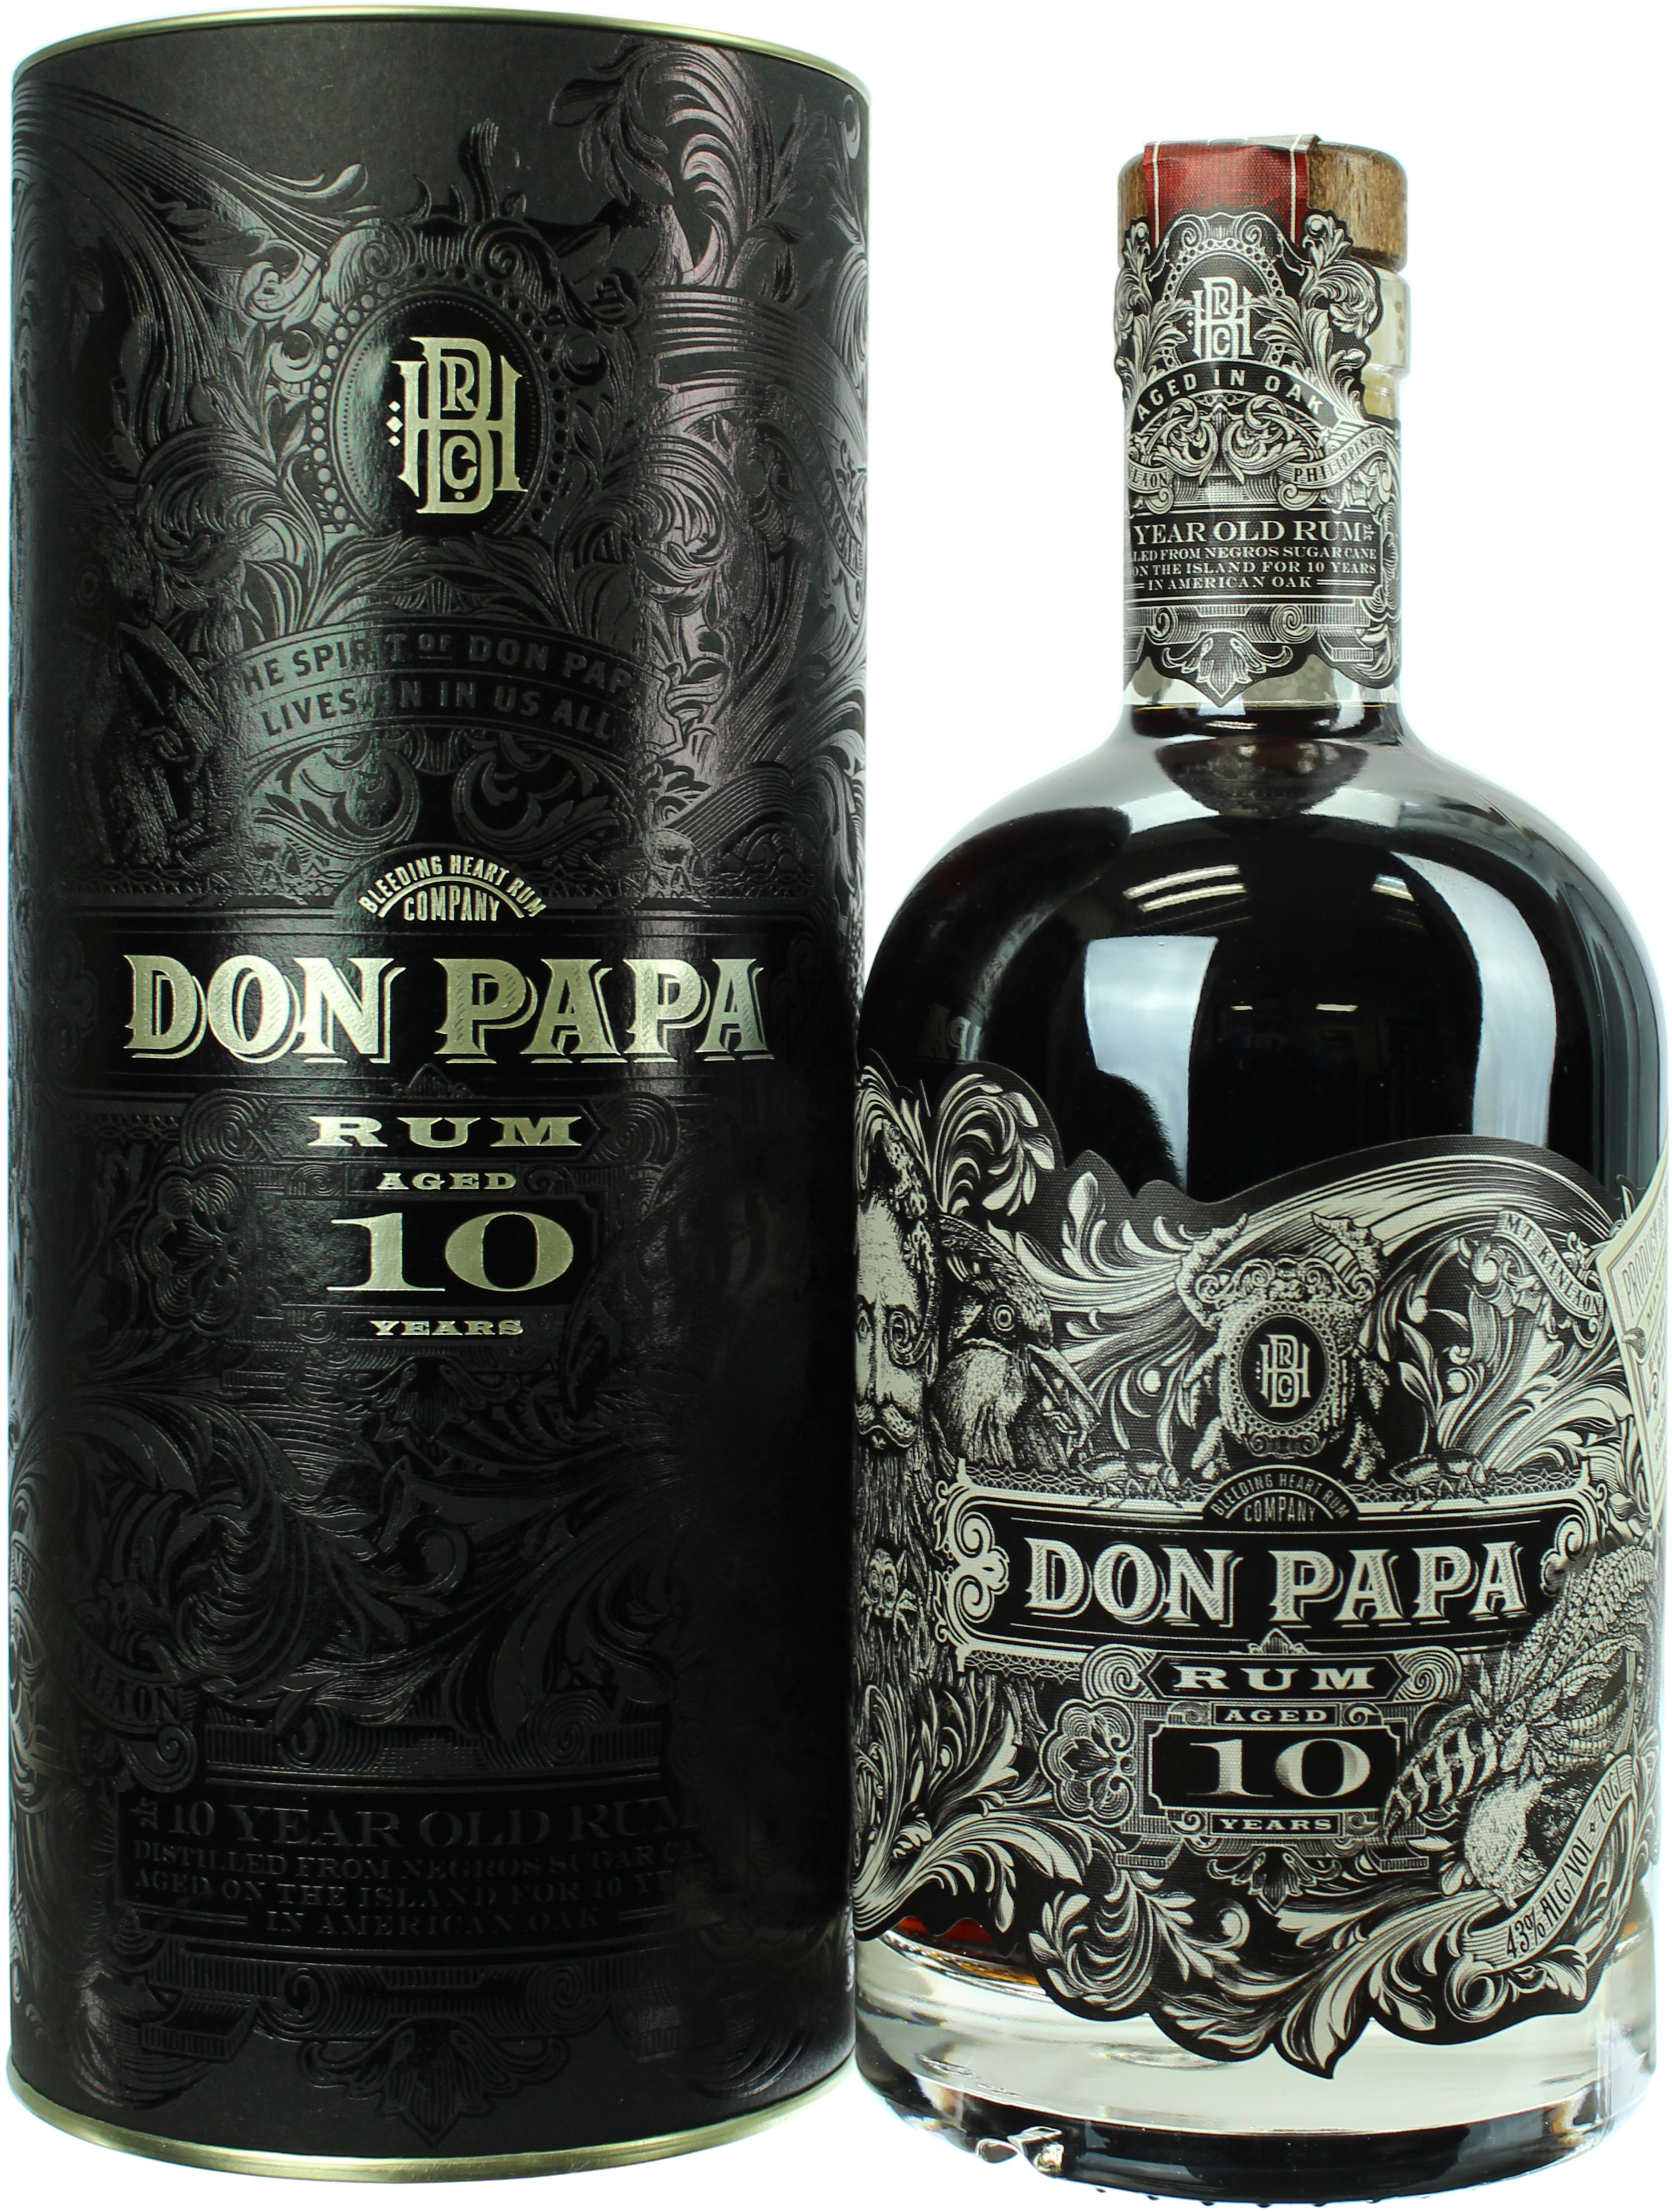 Don Papa Jahre Rum 10